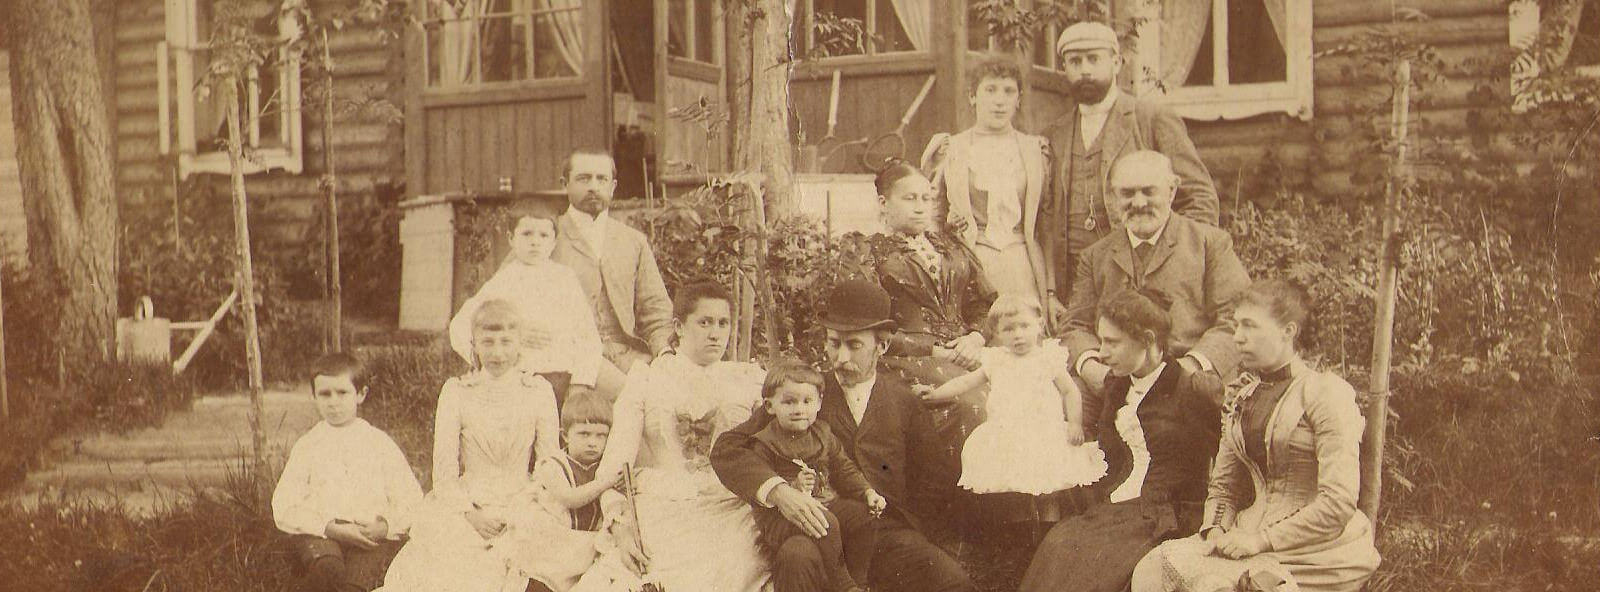 Familien Peto und Skron vor Datscha in Terijoki/Selenogorsk 1892 | Foto: Anja Klein/privat